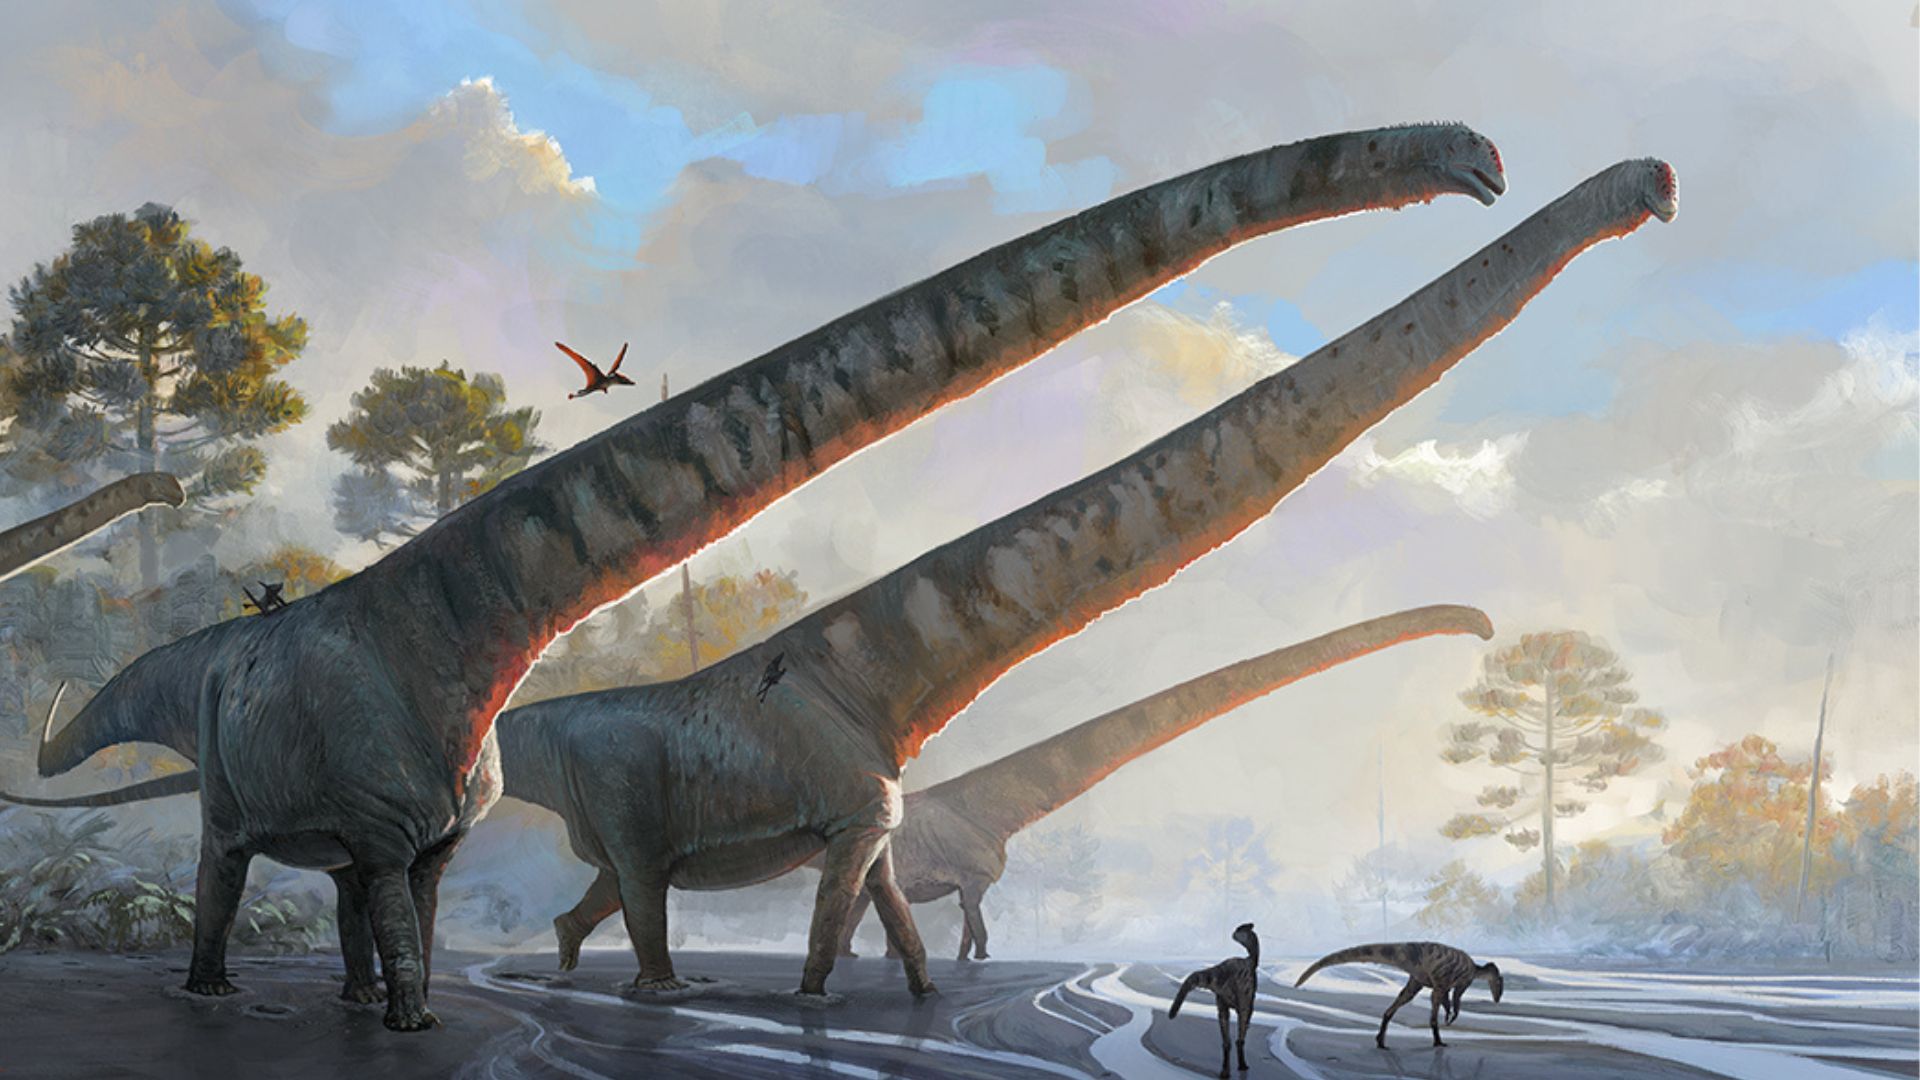 https://www.numerama.com/wp-content/uploads/2023/03/sauropode-cou-1.jpg